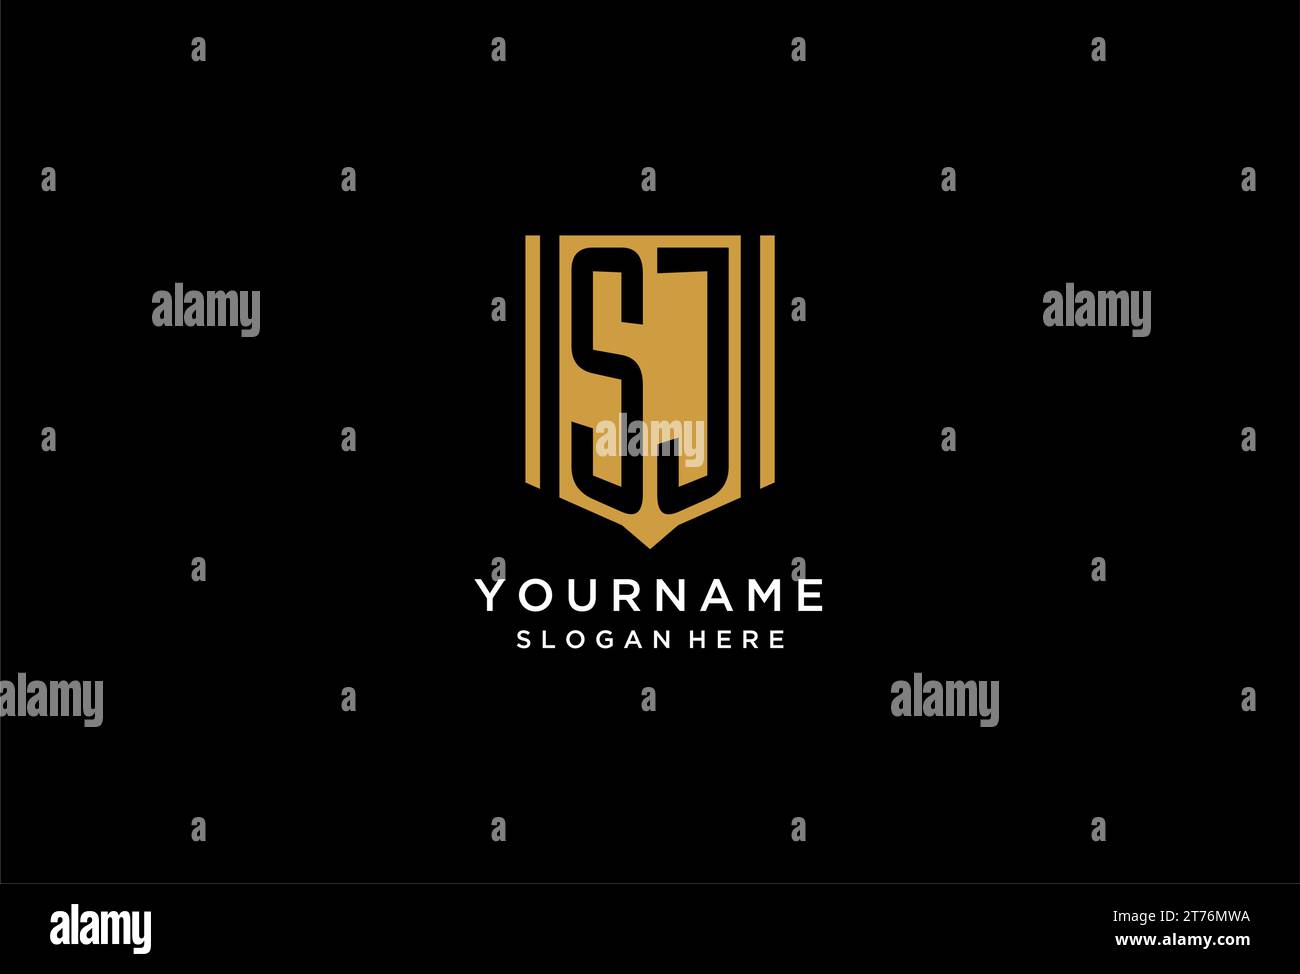 SJ monogram logo with geometric shield icon design inspiration Stock Vector